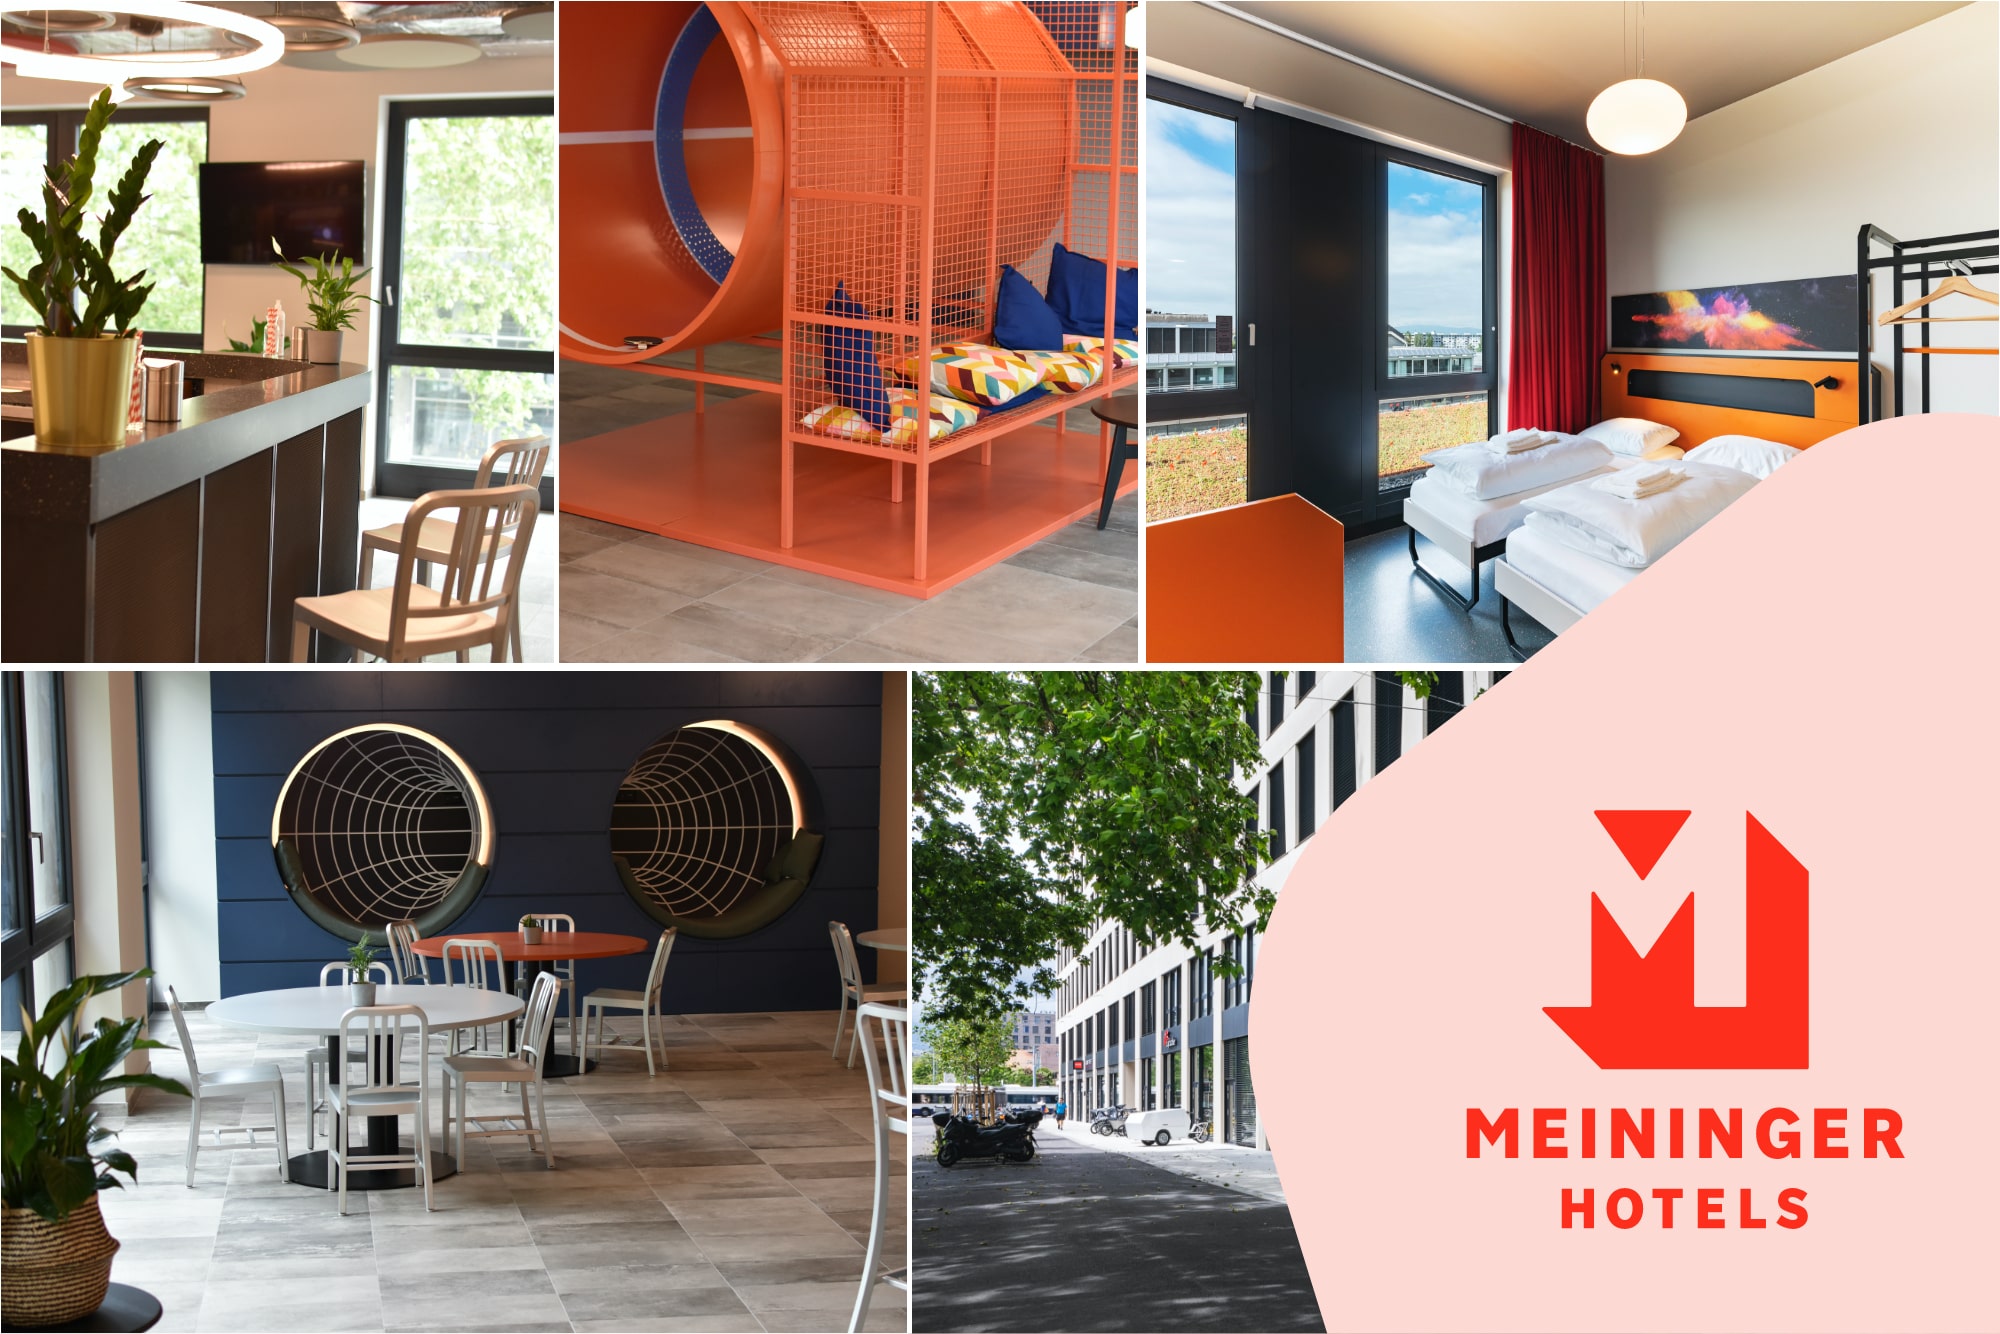 Geneva: MEININGER Hotels opens second hotel in Switzerland in June – interior design inspired by the big bang